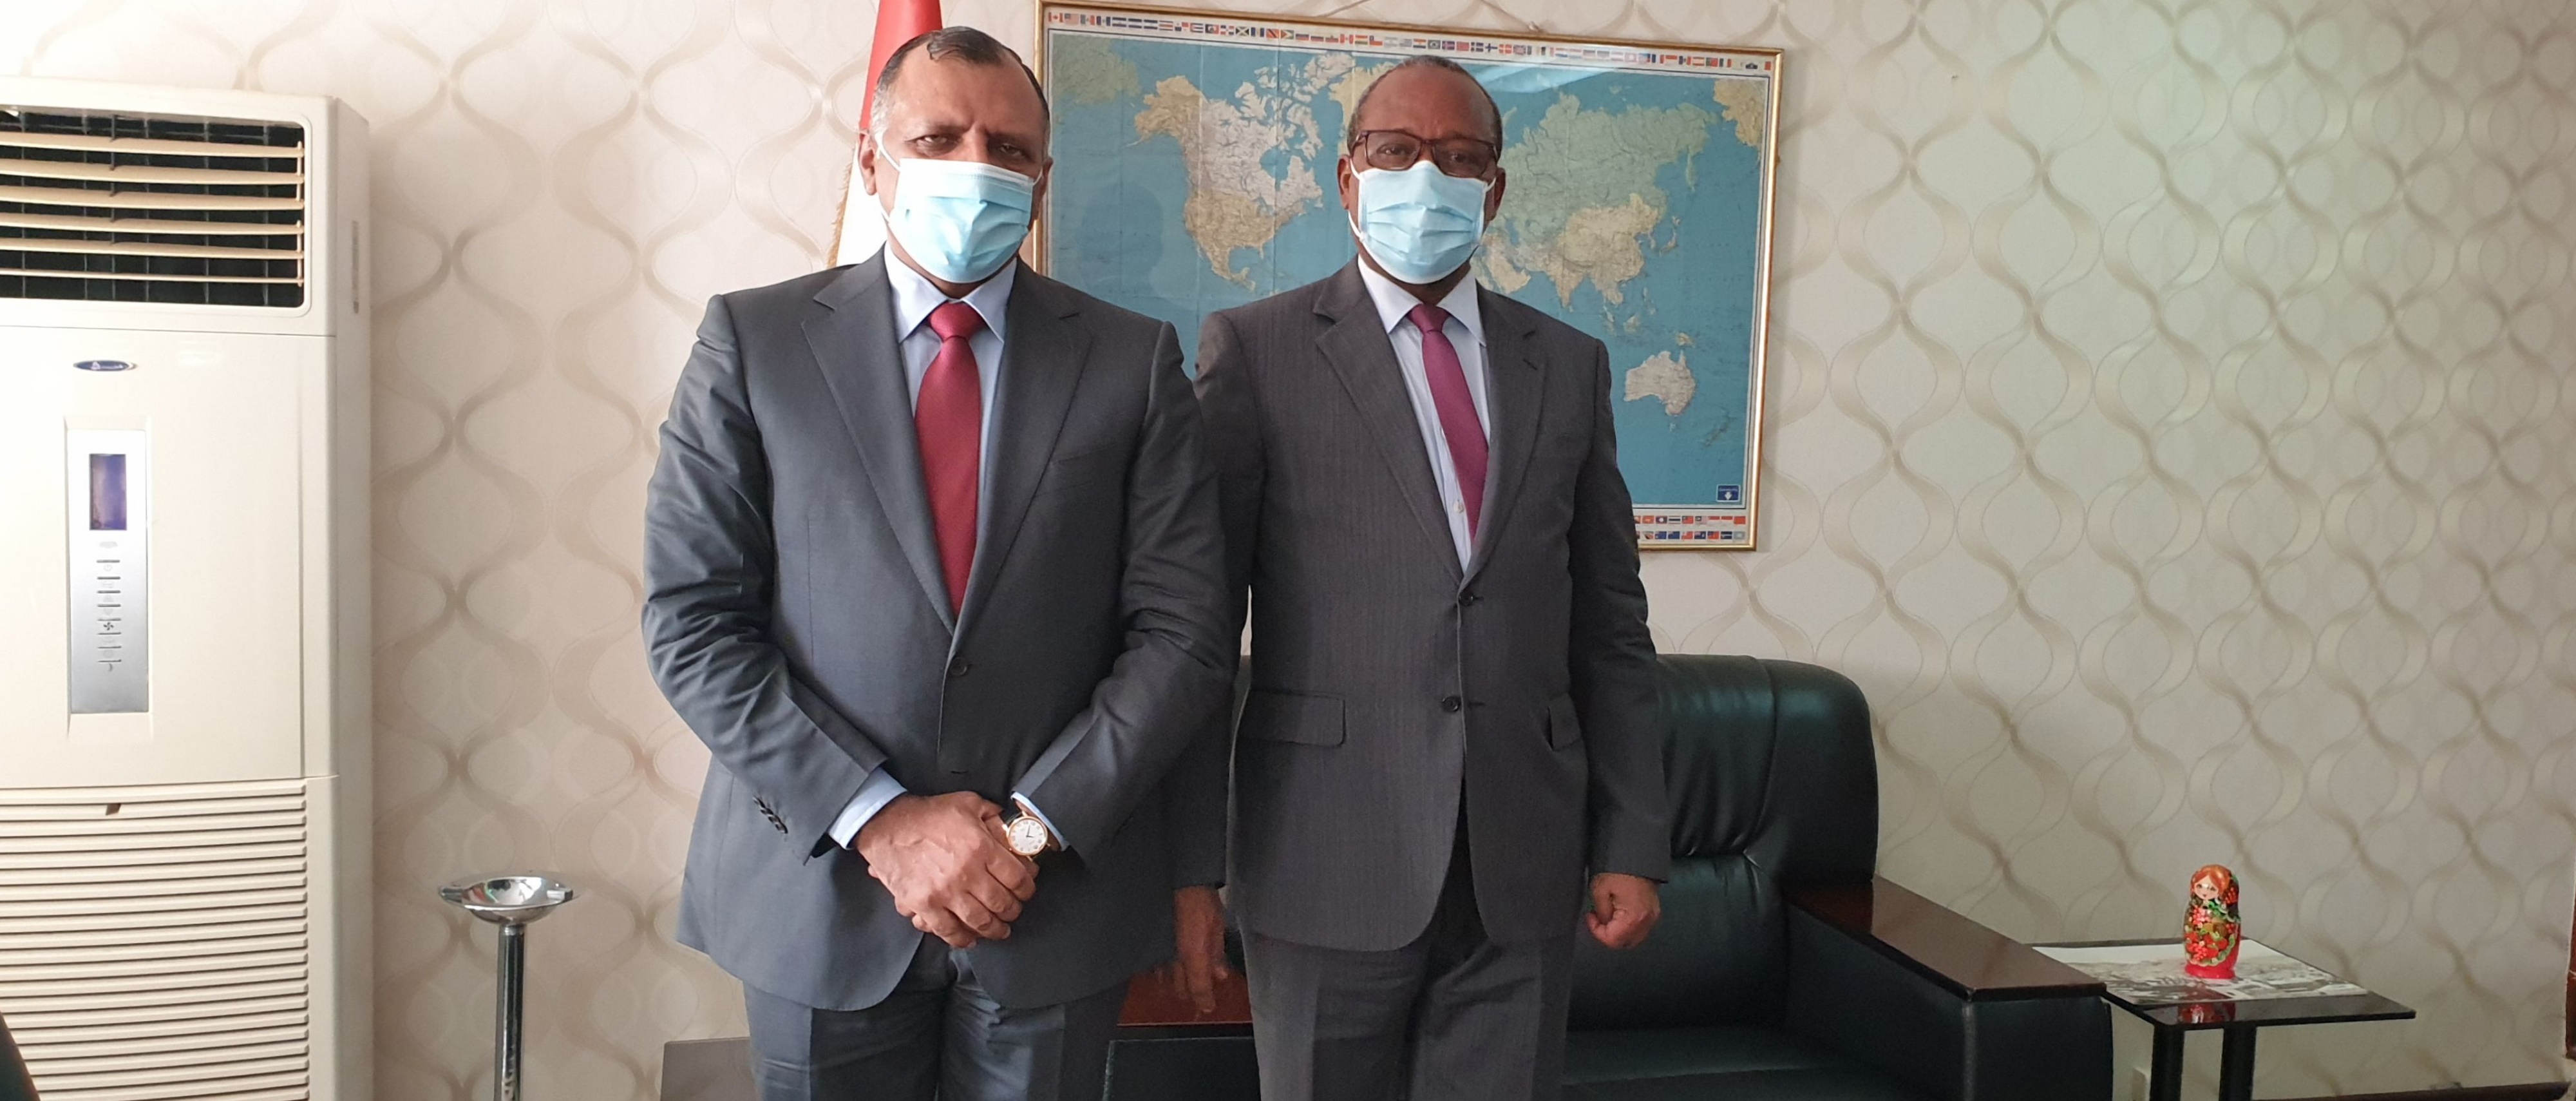  Ambassador Mr. Prem Nair and Niger Foreign Minister, Mr. Hassoumi Massoudou